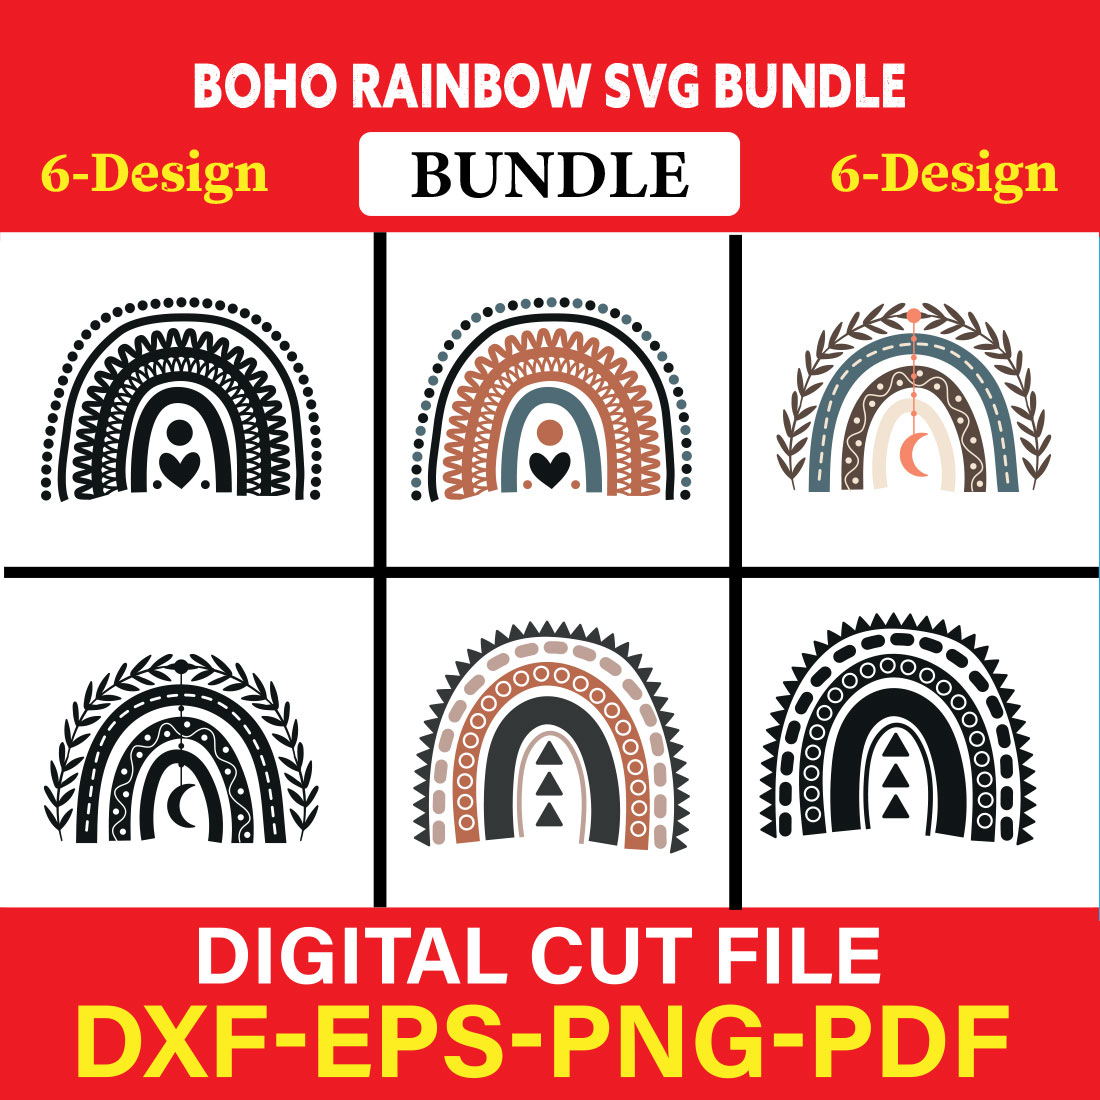 Boho Rainbow T-shirt Design Bundle Vol-2 cover image.